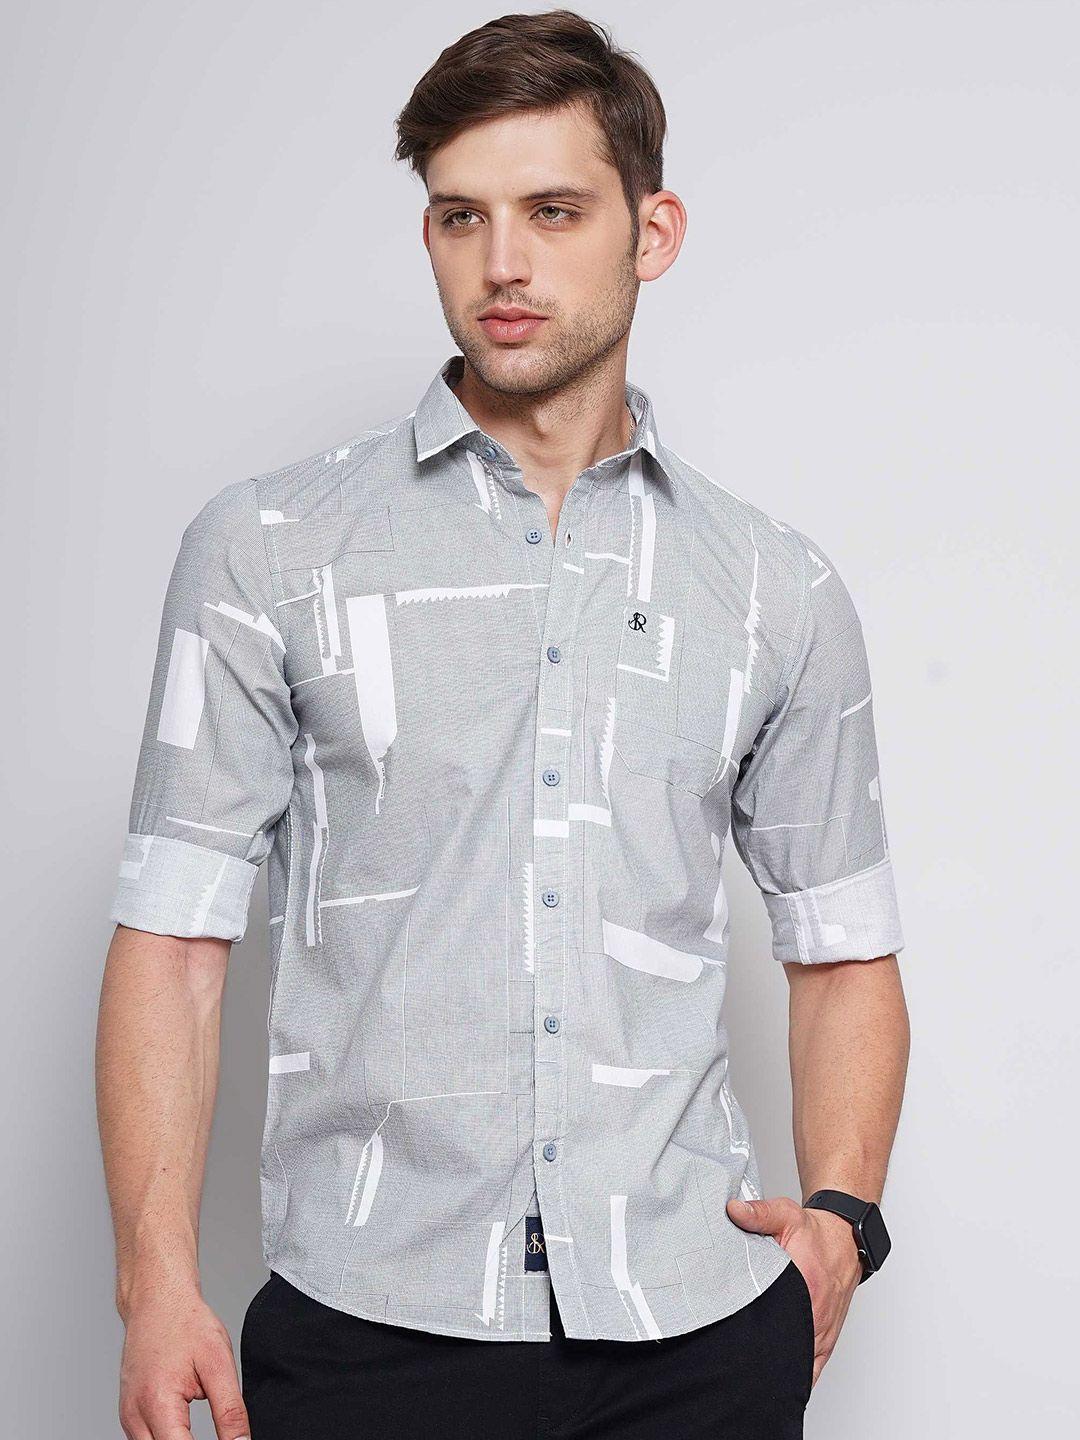 soratia-abstract-printed-cotton-slim-fit-casual-shirt